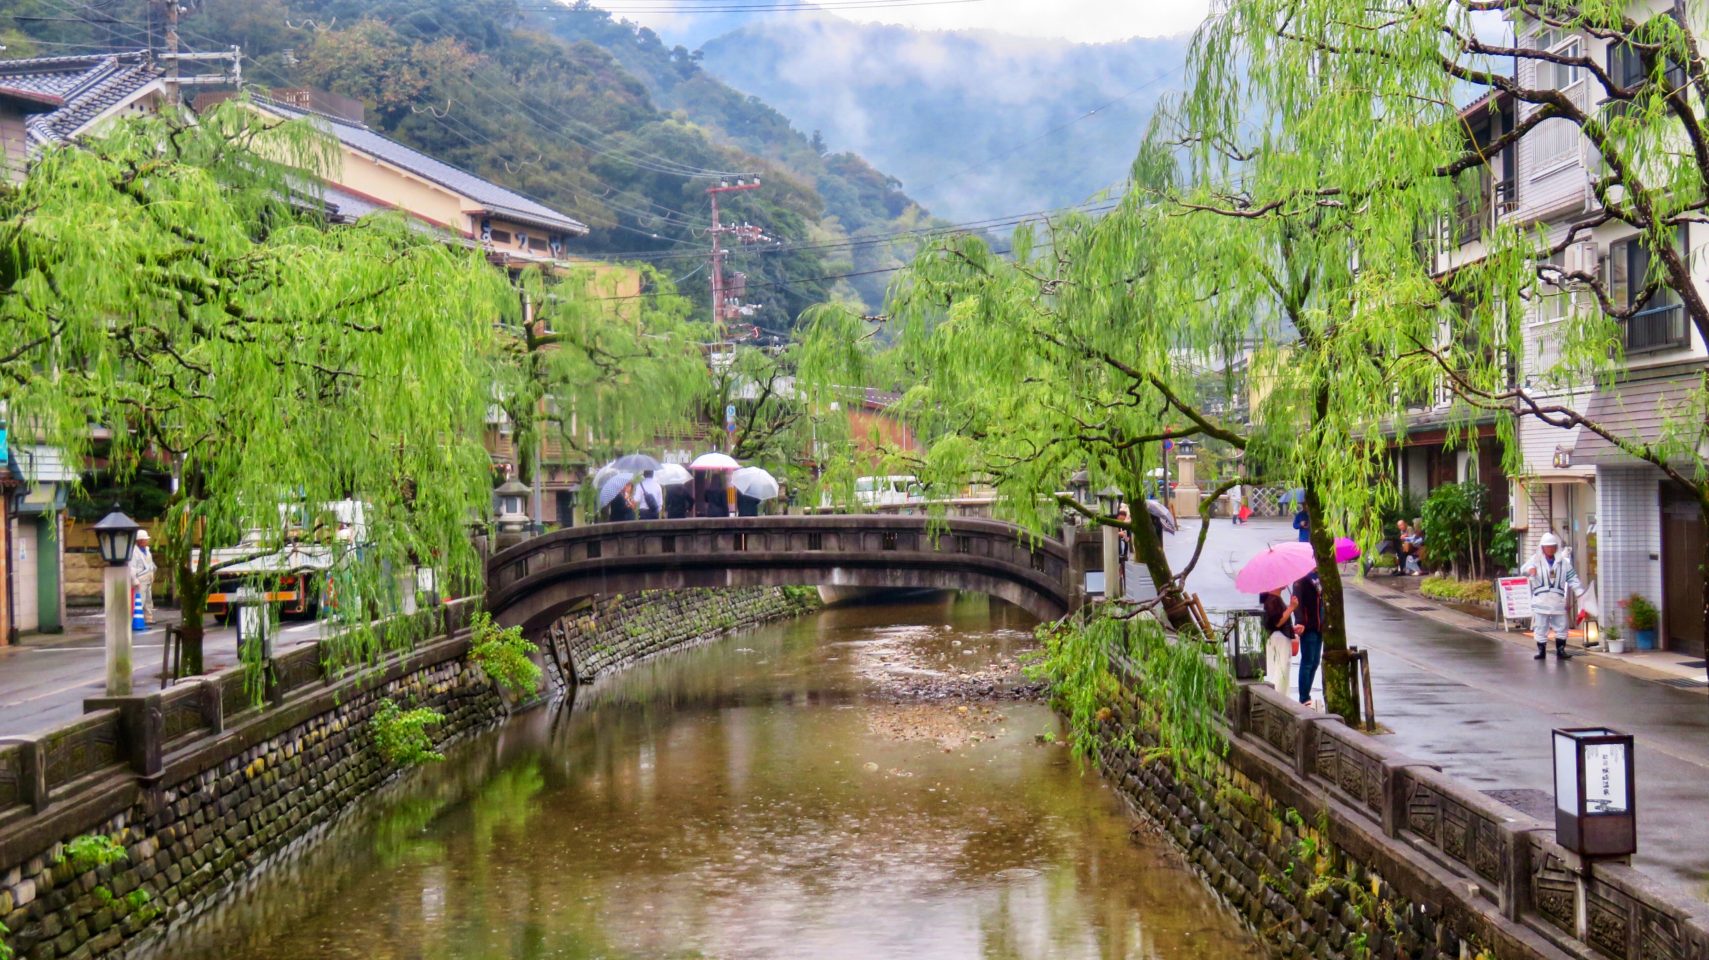 Japan Favorite Experiences ~ The Hot Springs town of Kinosaki Onsen in Japan